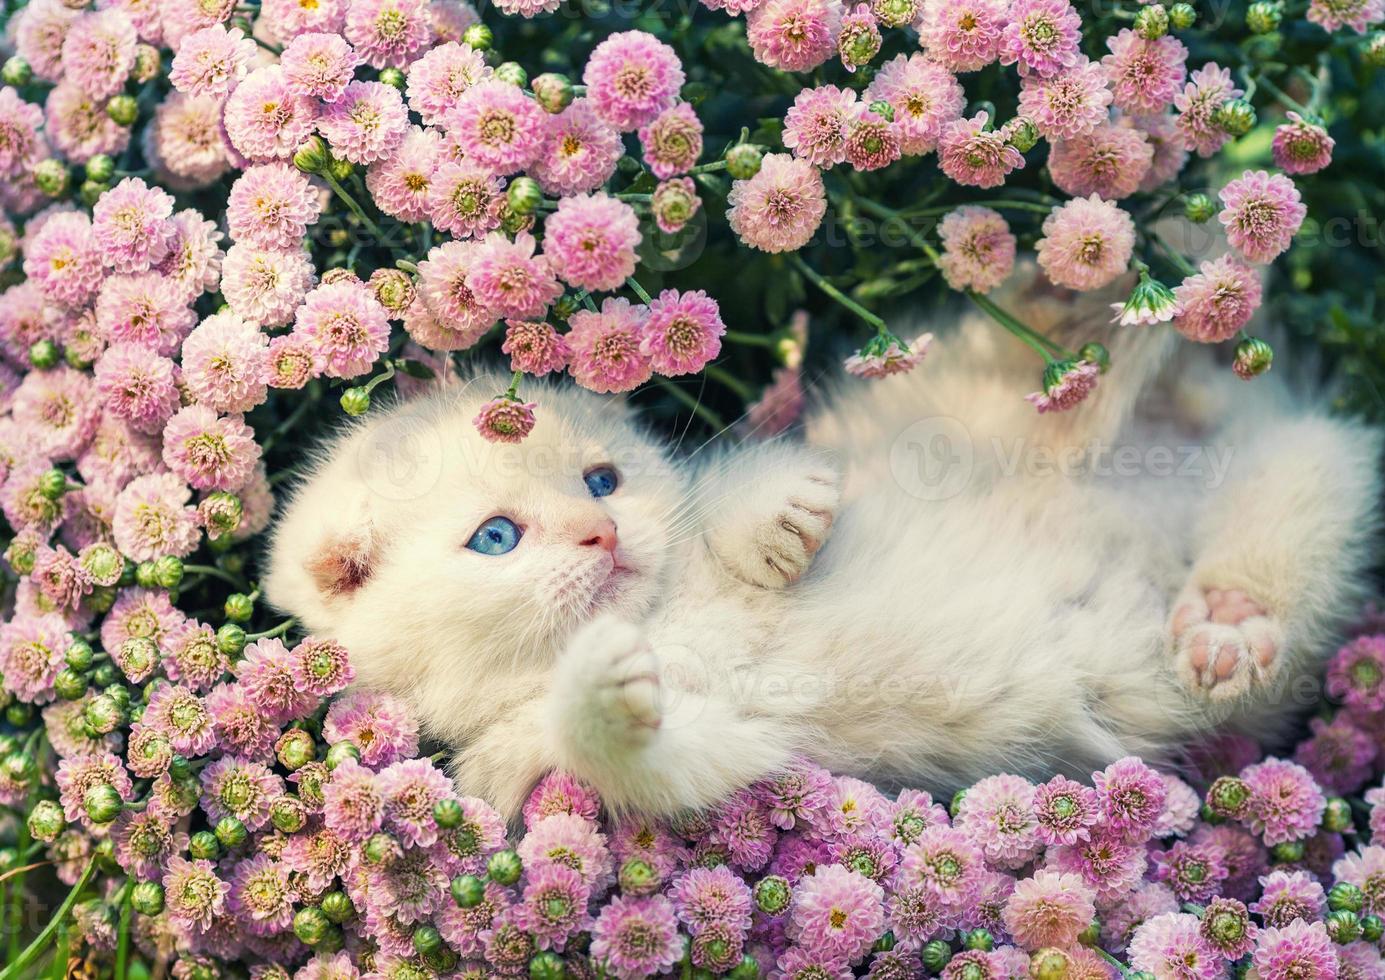 Cute kitten relaxing in flowers 950869 Stock Photo at Vecteezy